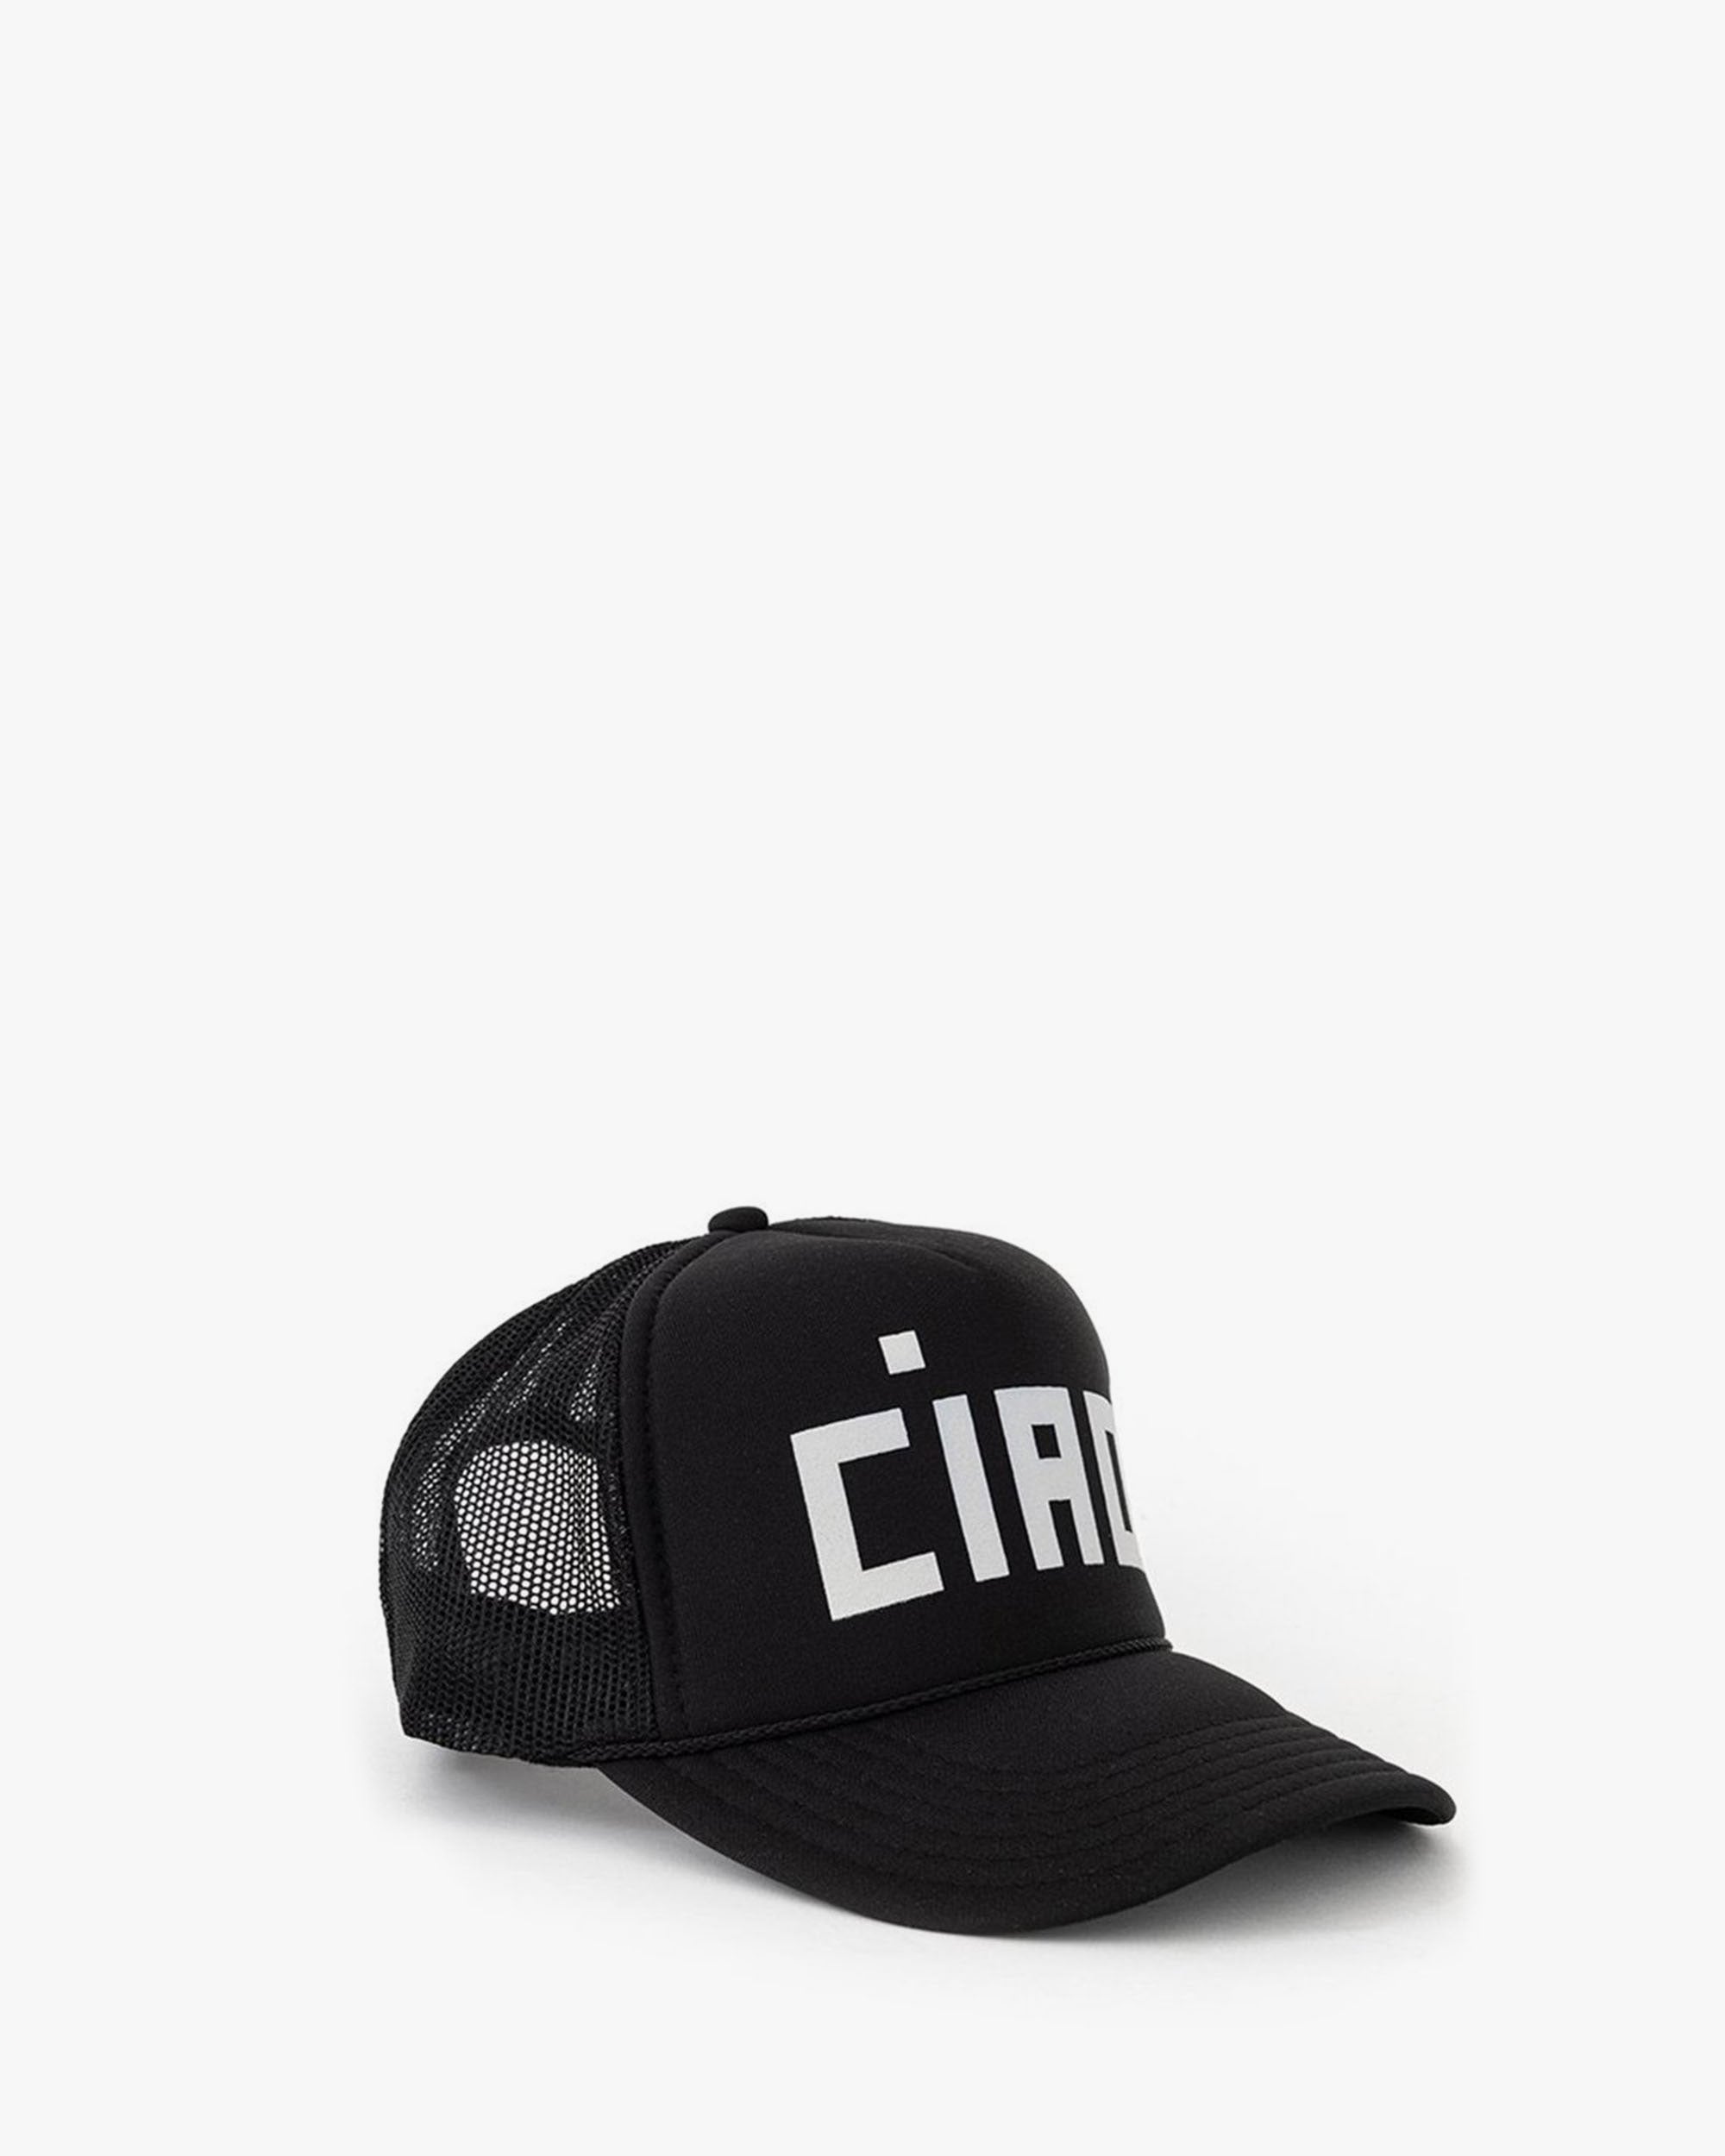 Ciao Trucker Hat - Black